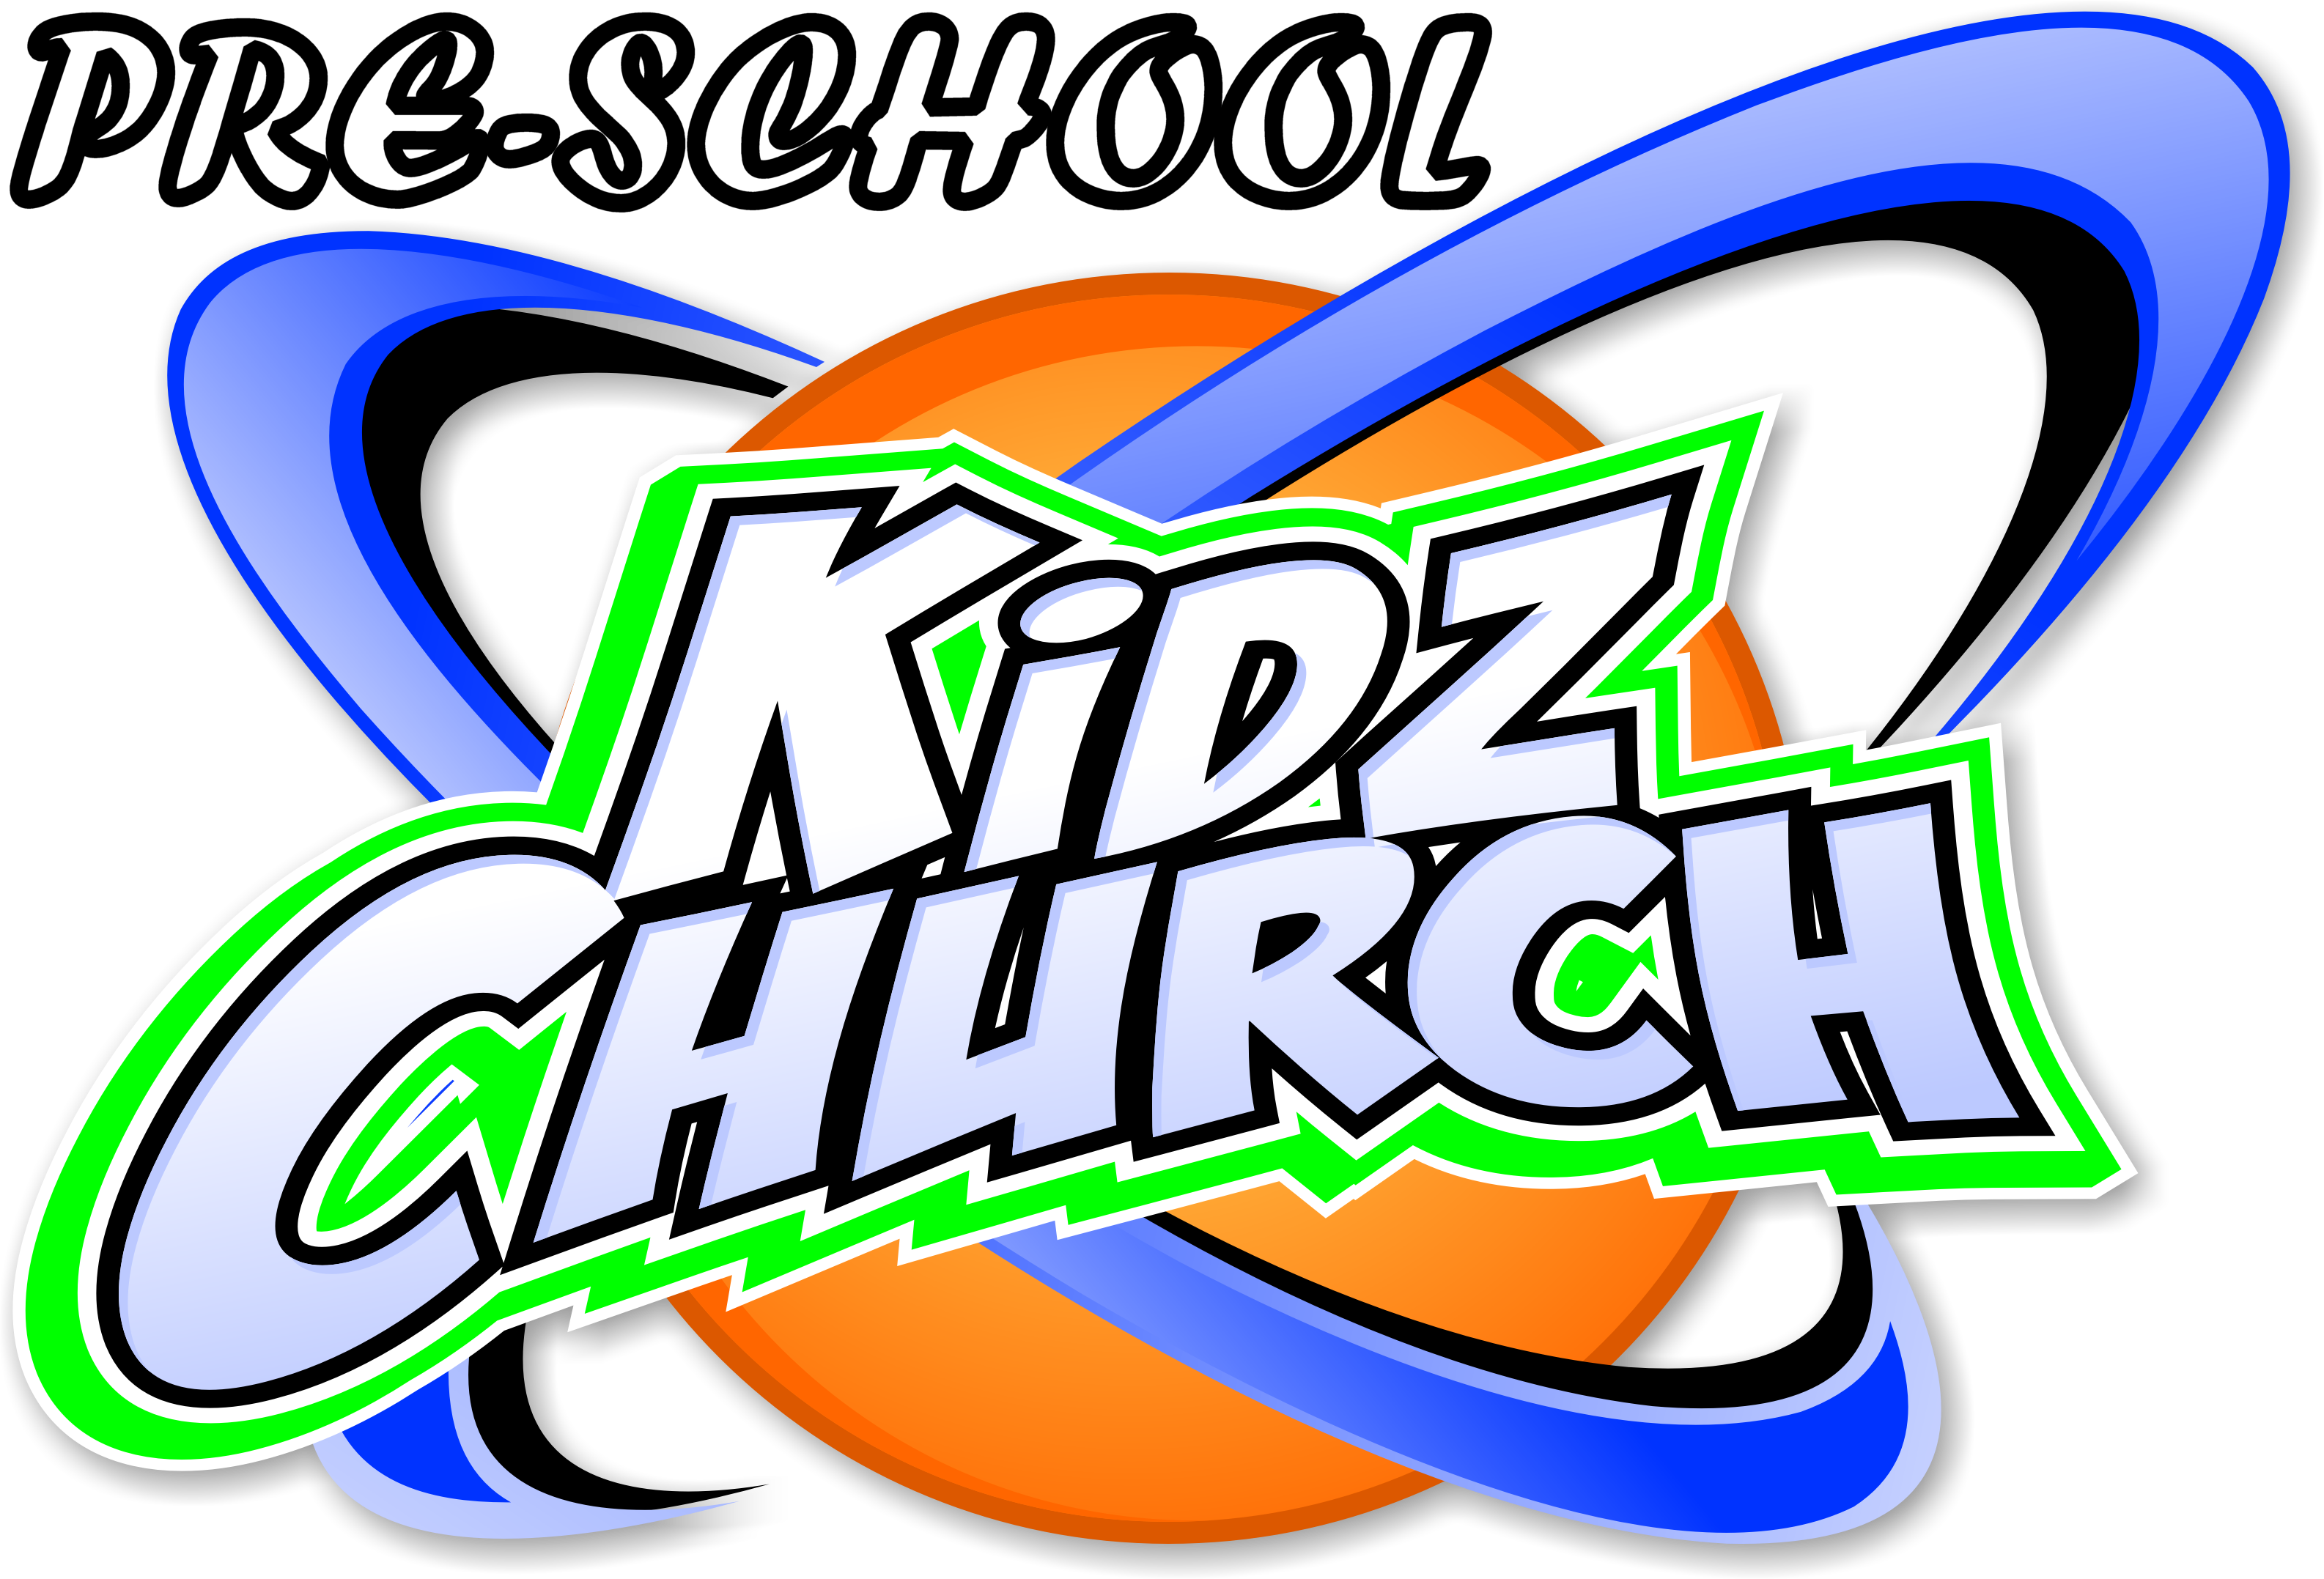 Our Preschool Children's Church - Our Preschool Children's Church (3171x2155)